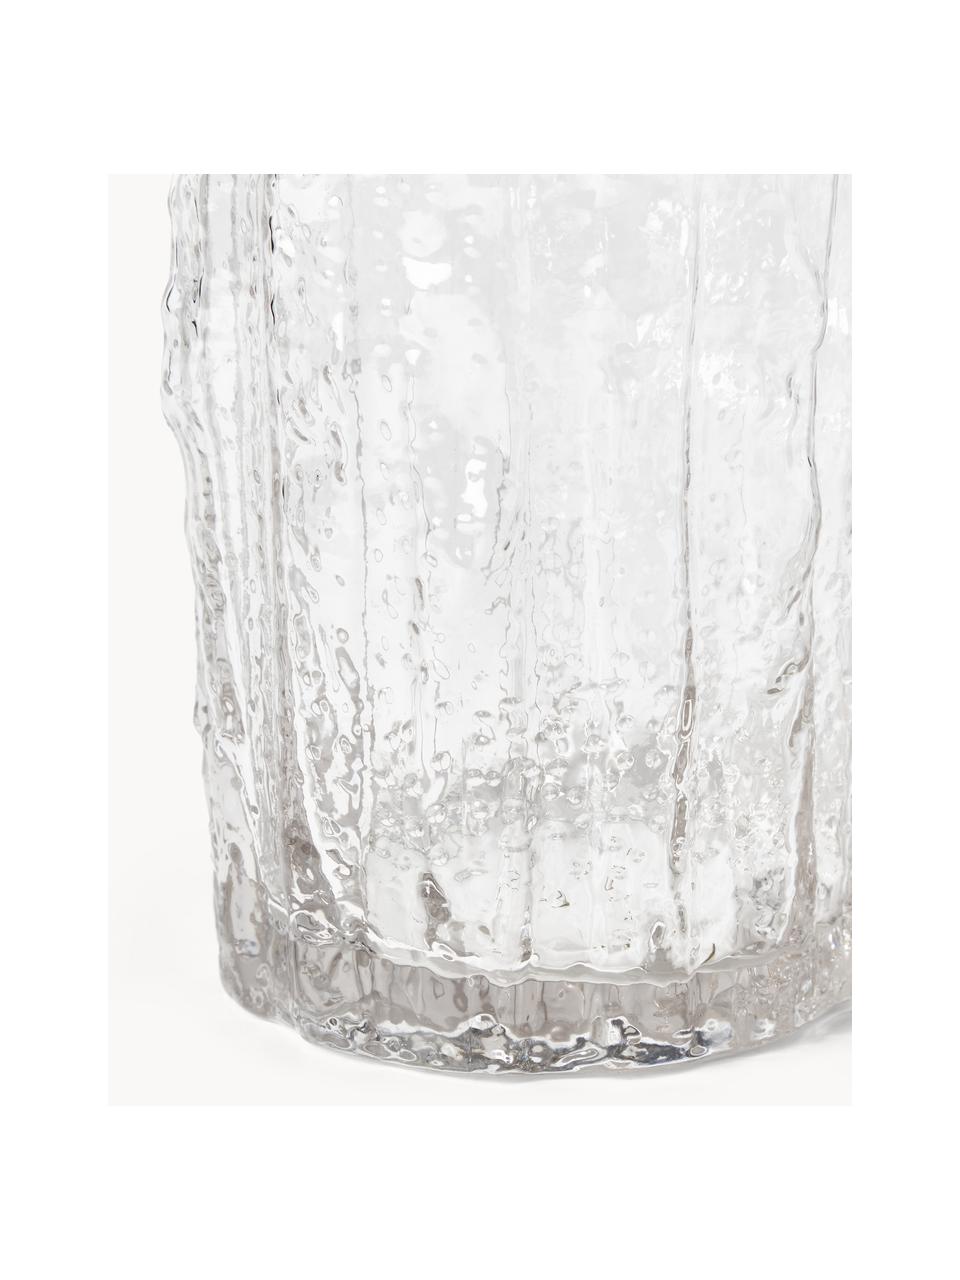 Glazen vaas Elli met gestructureerde oppervlak, Glas, Transparant, Ø 13  x H 30 cm